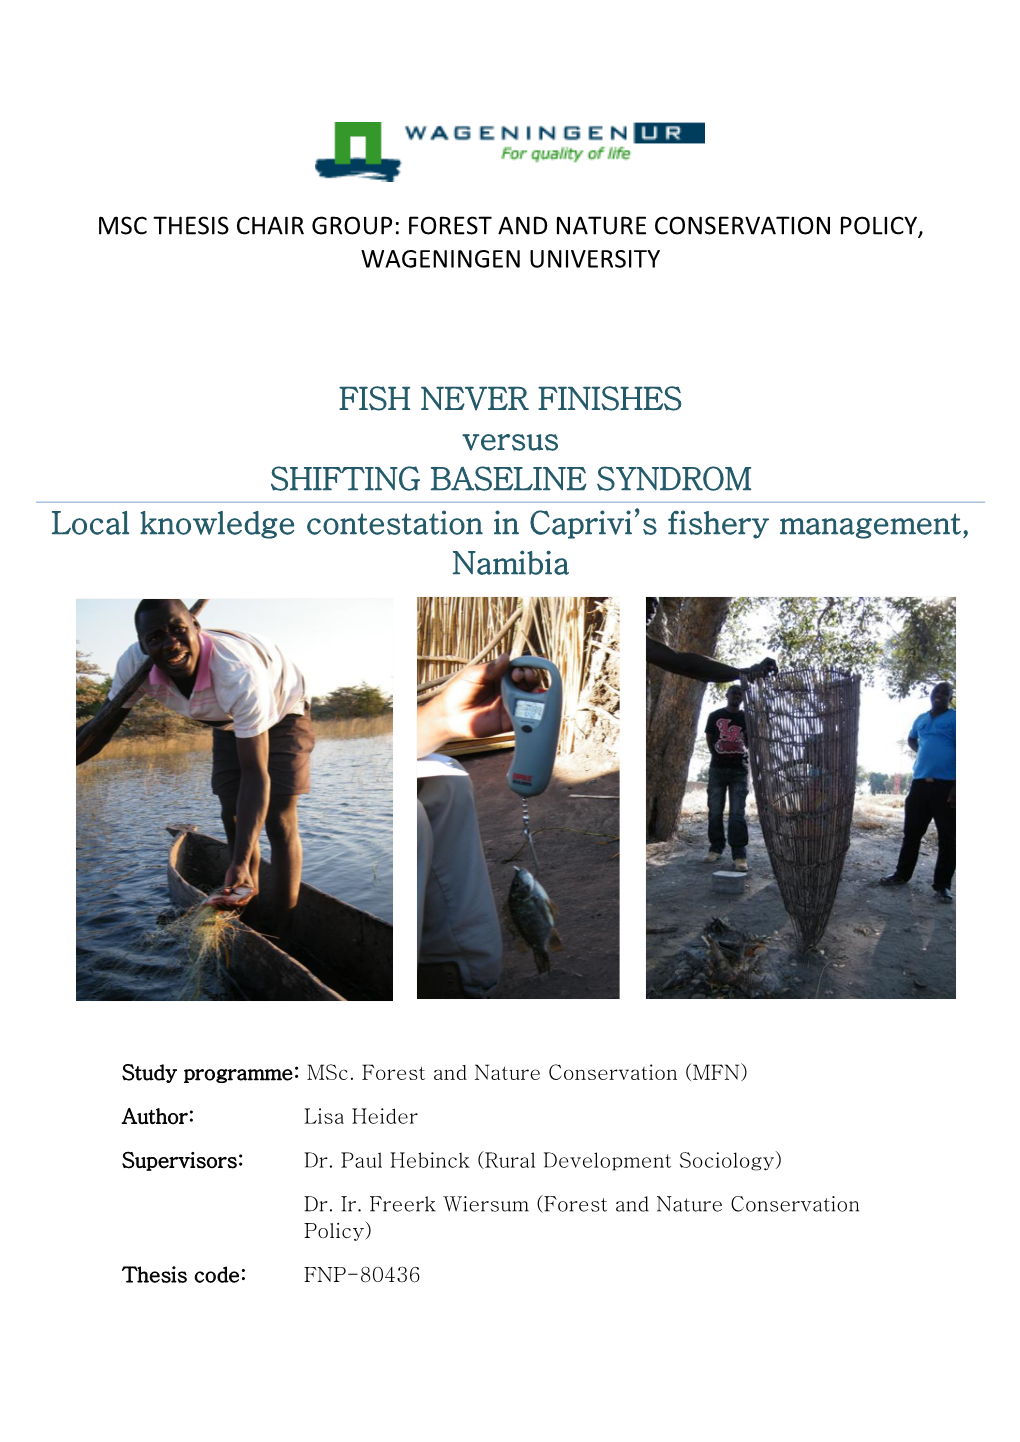 Local Knowledge Contestation in Caprivi's Fishery